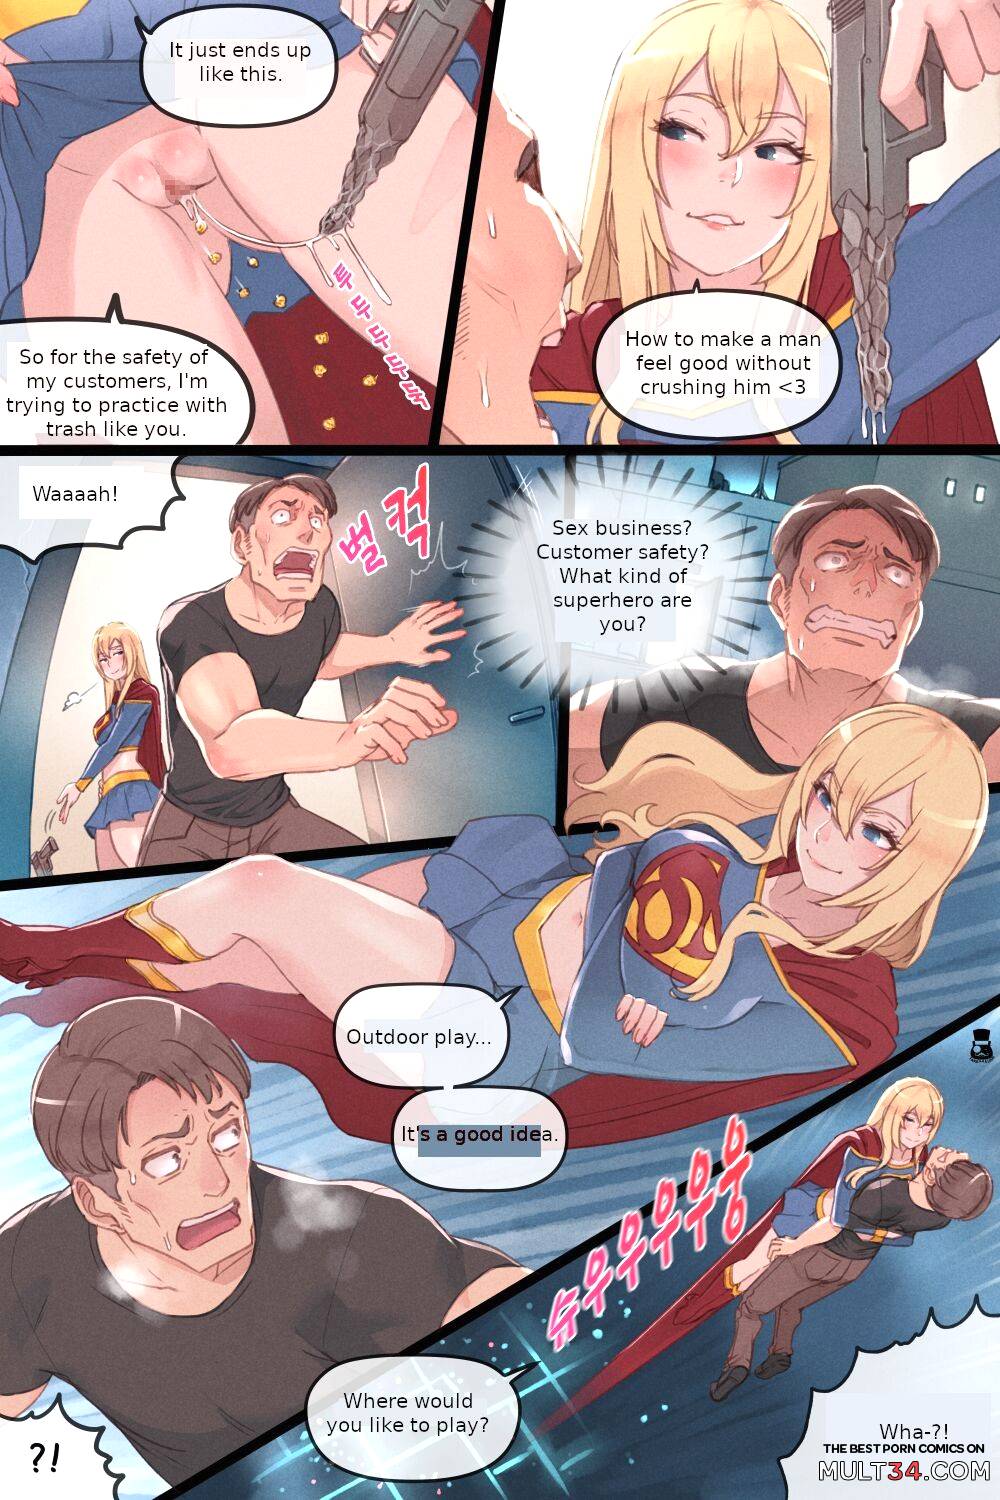 Supergirl's Secret Trouble porn comic - the best cartoon porn comics, Rule  34 | MULT34